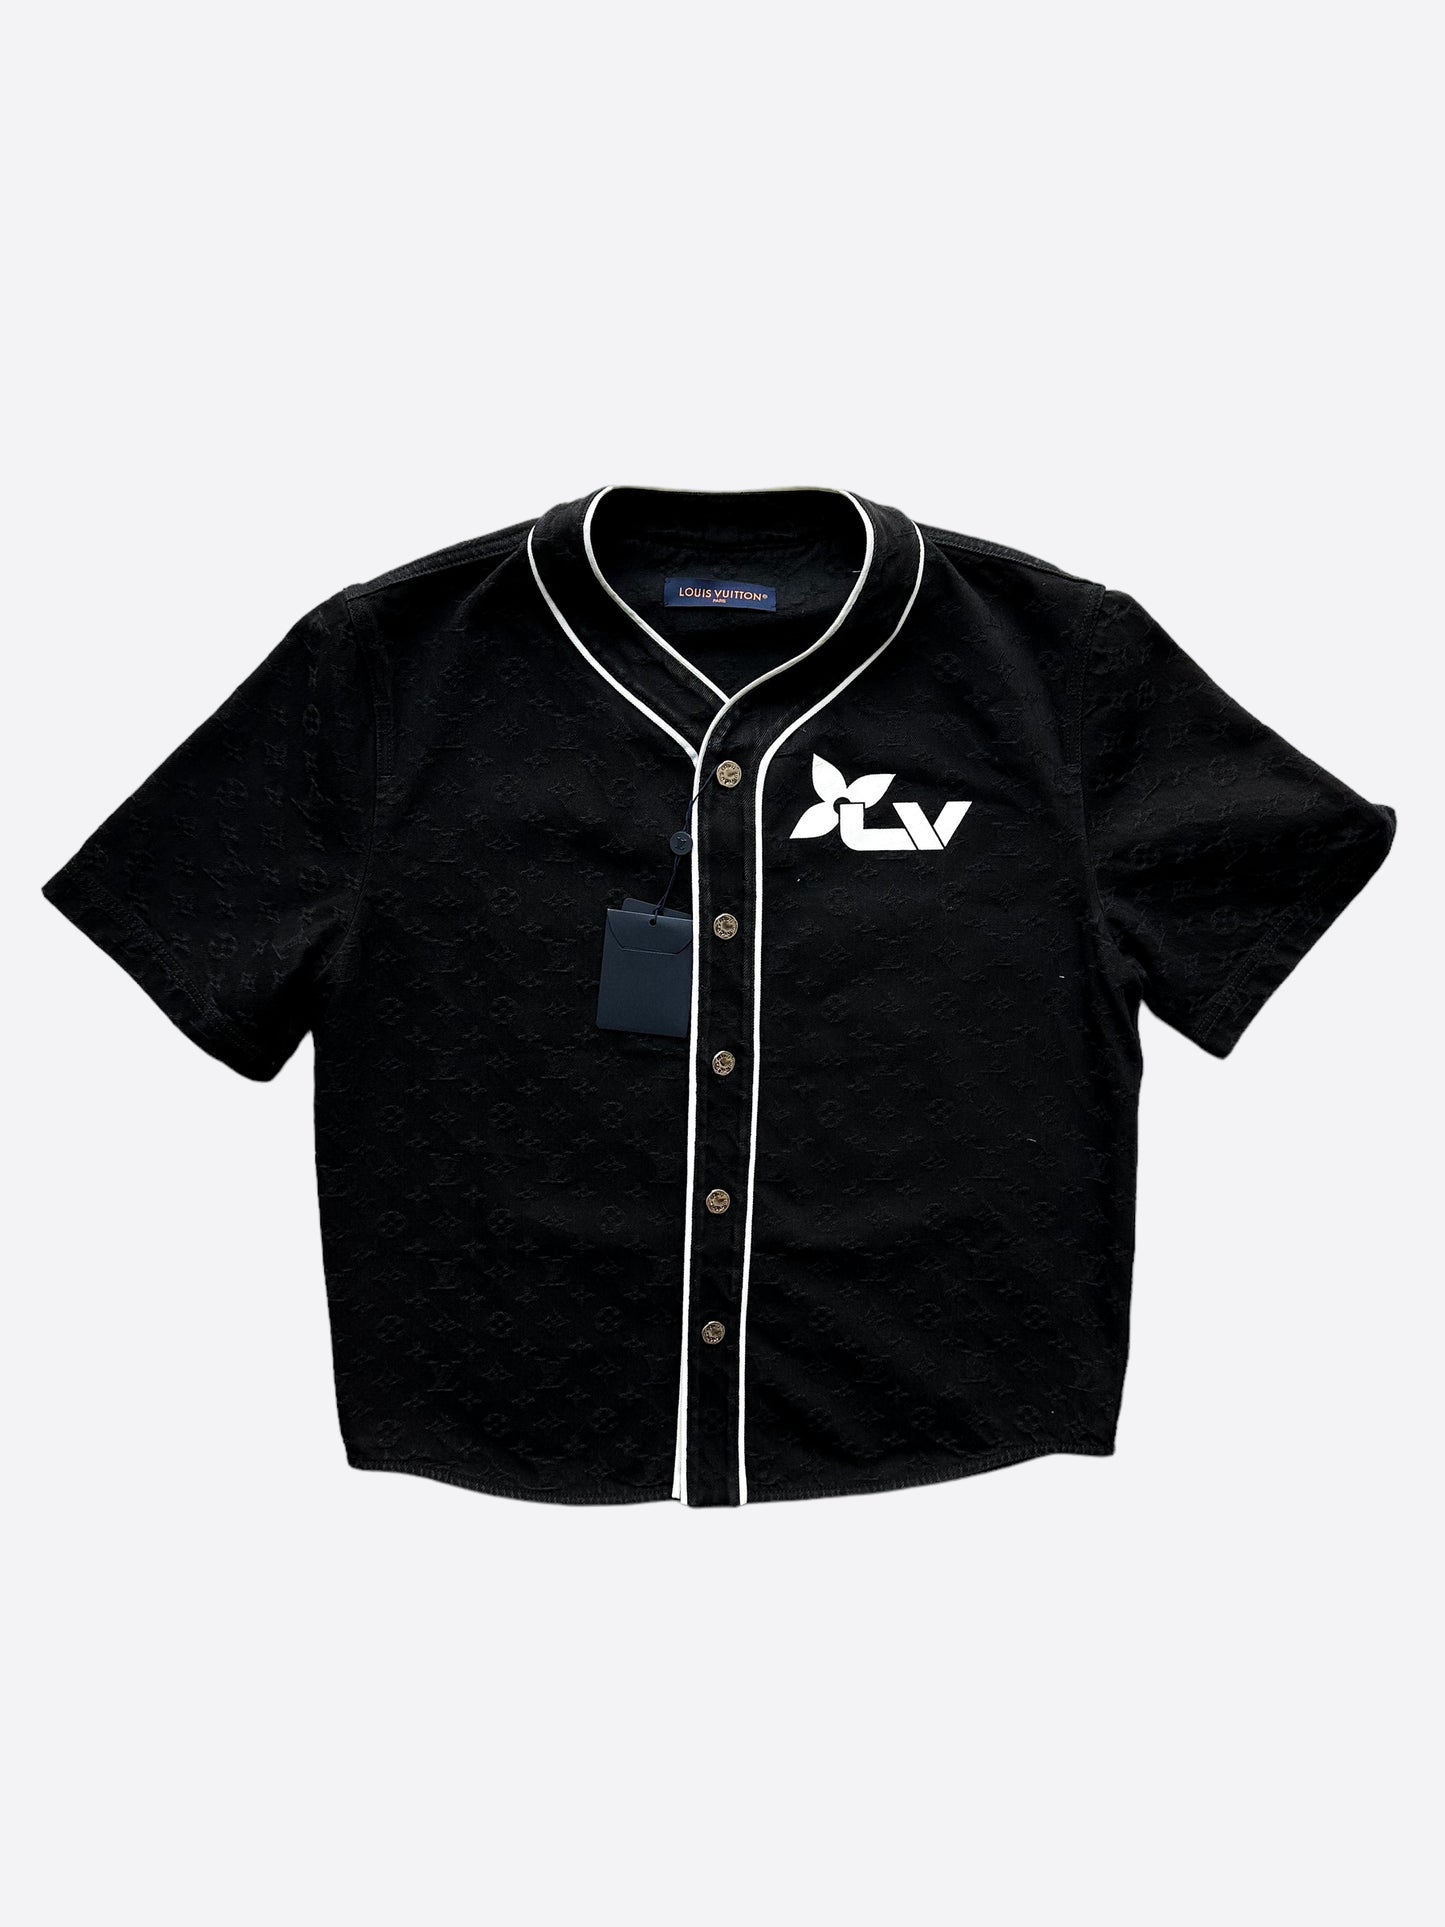 Louis Vuitton Monogram Denim Black Baseball Shirt - L / Black